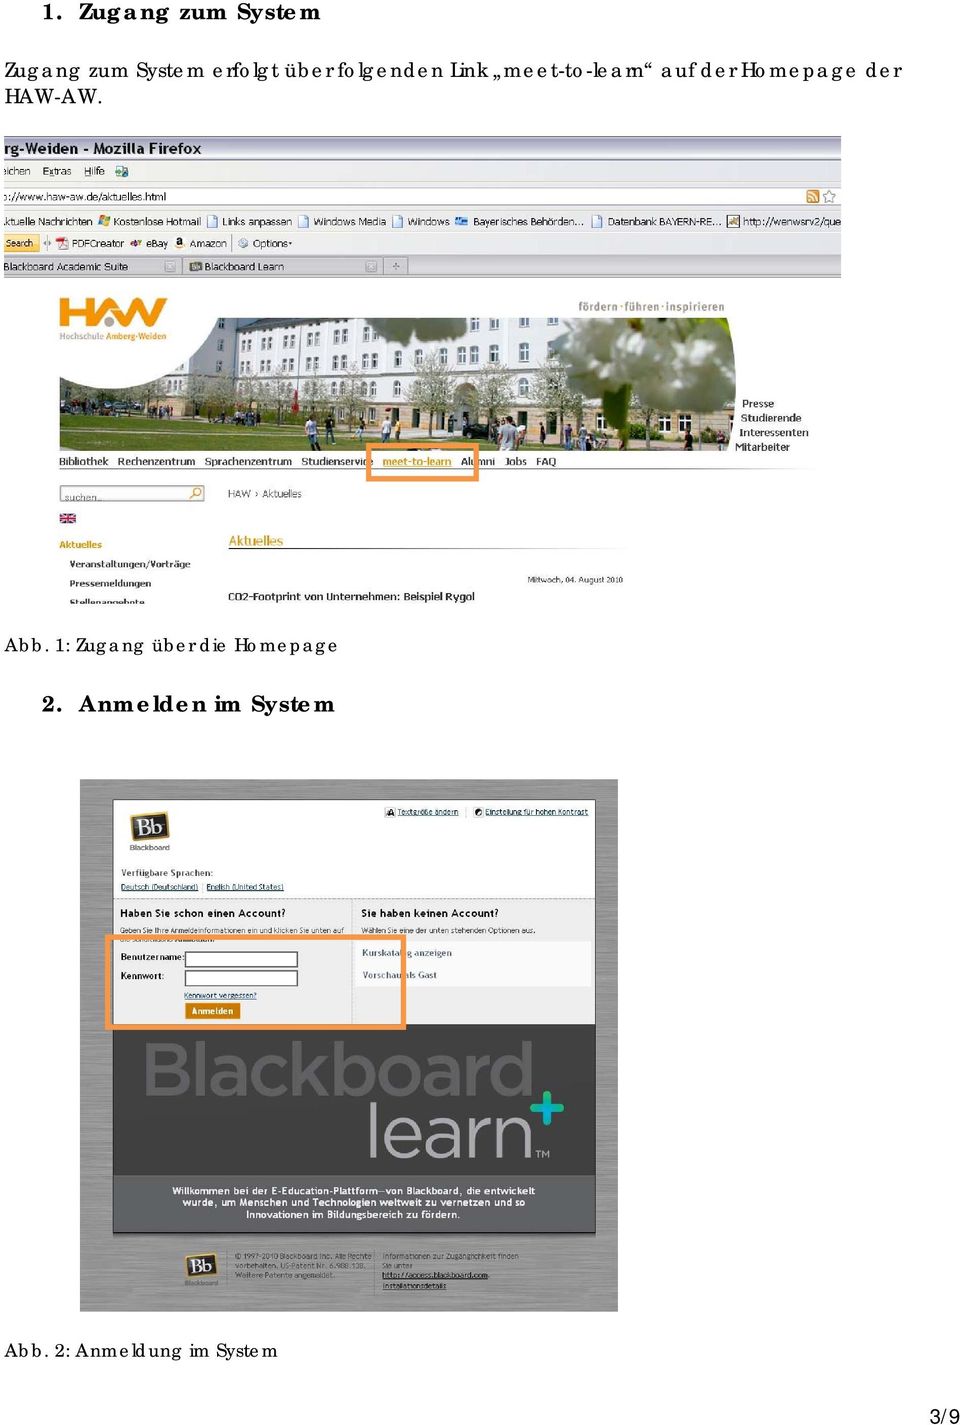 Homepage der HAW-AW. Abb.